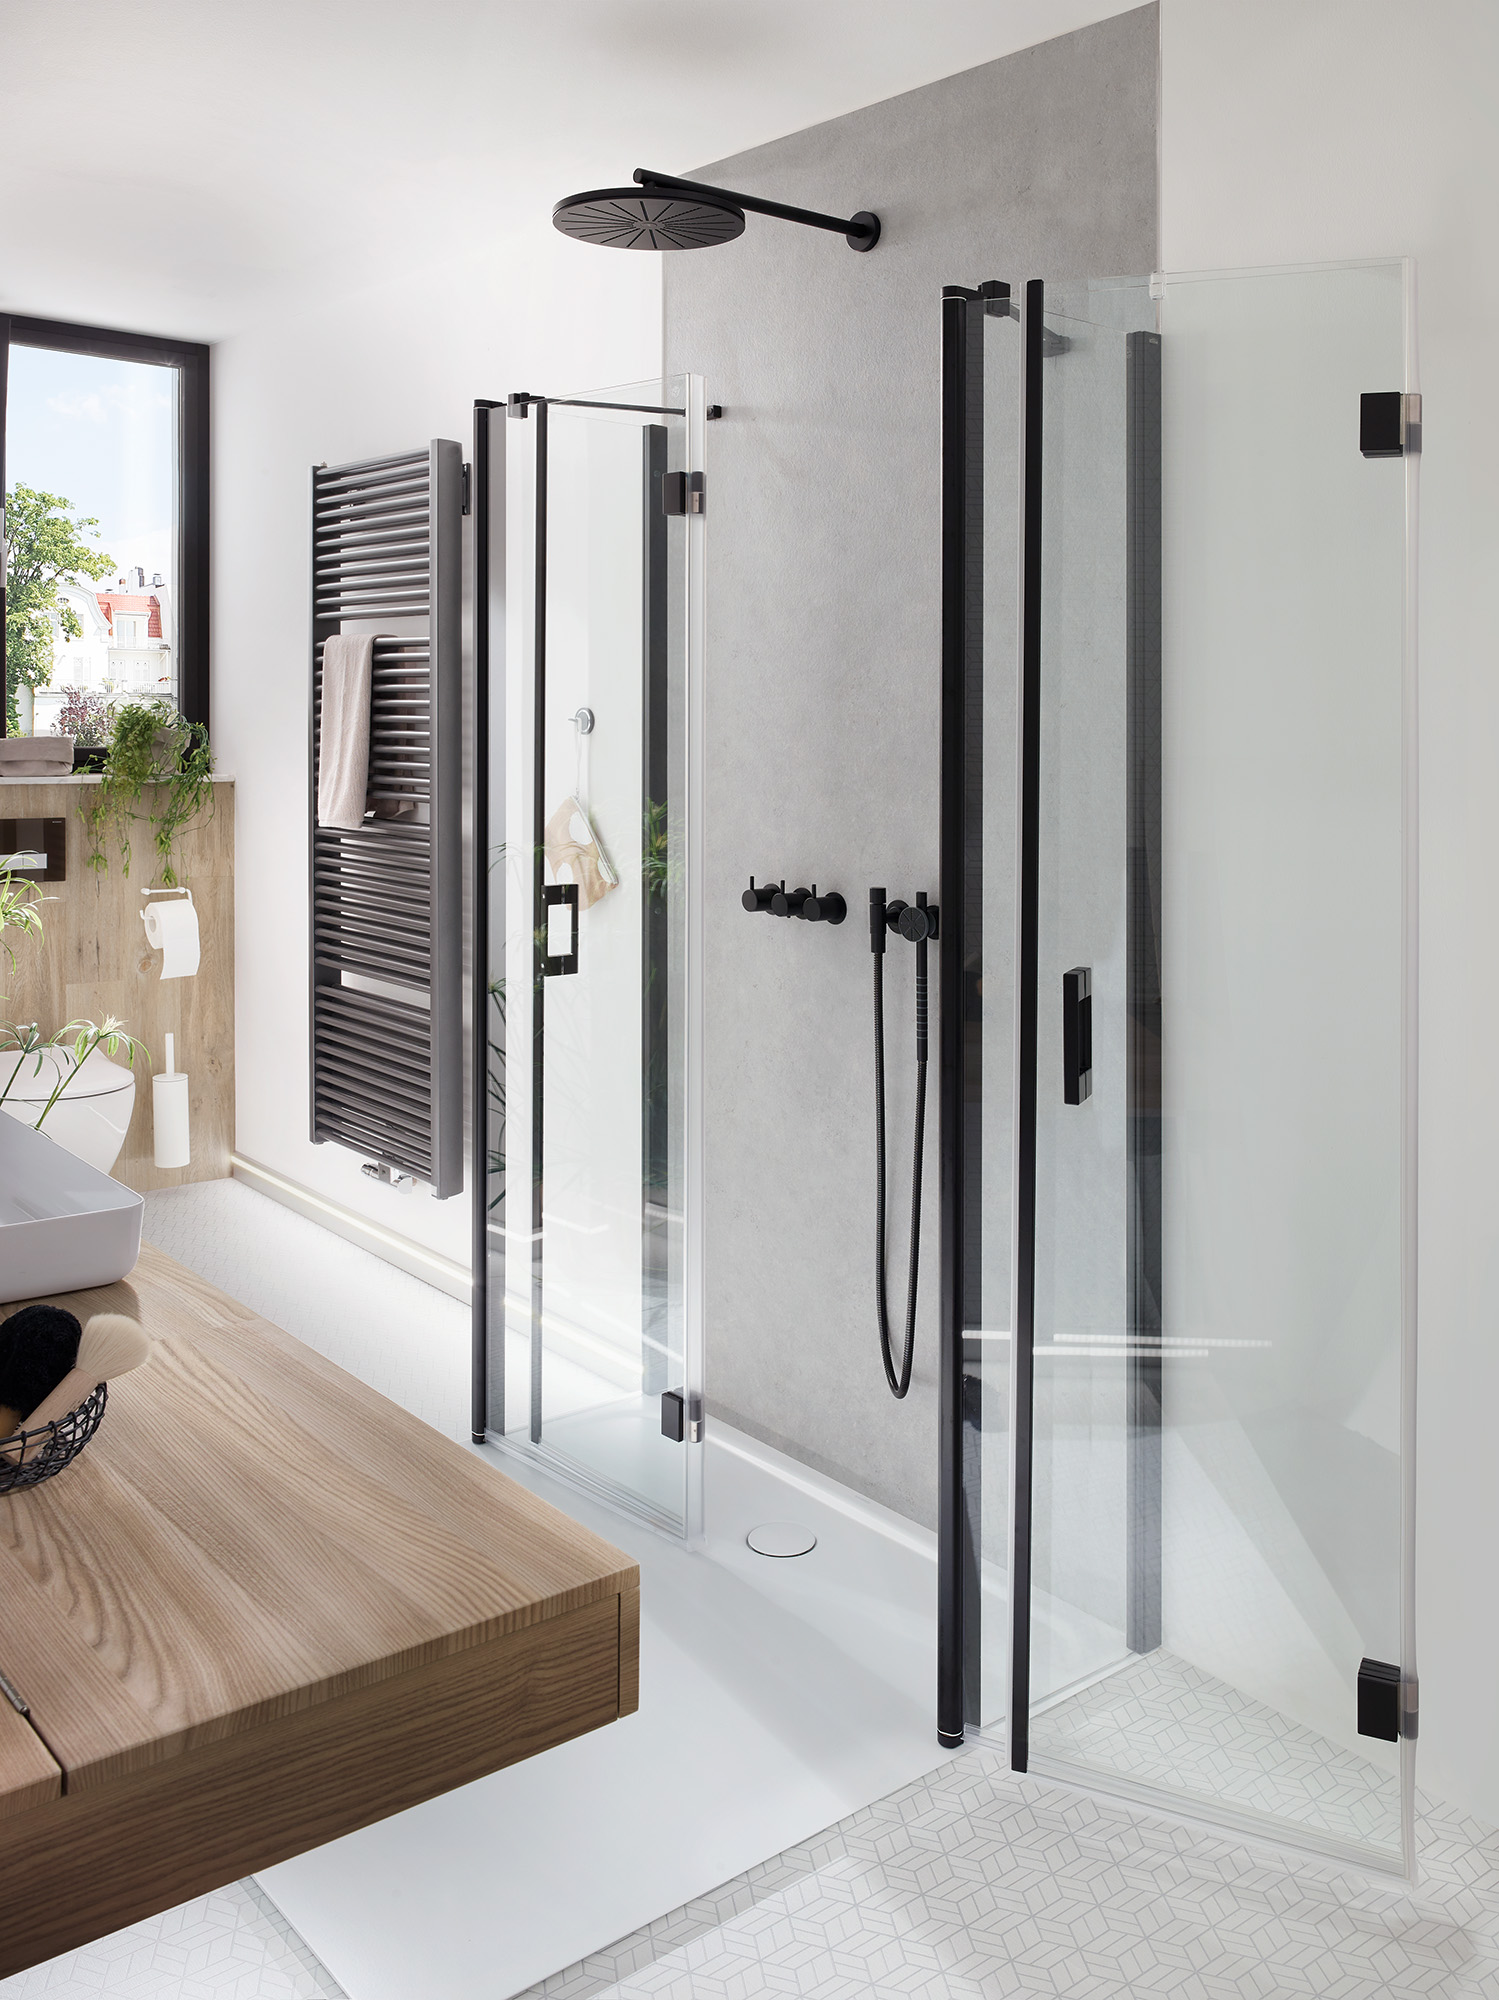 Kermi profile shower enclosure LIGA hinged folding doors U-shaped shower enclosure in Black, open